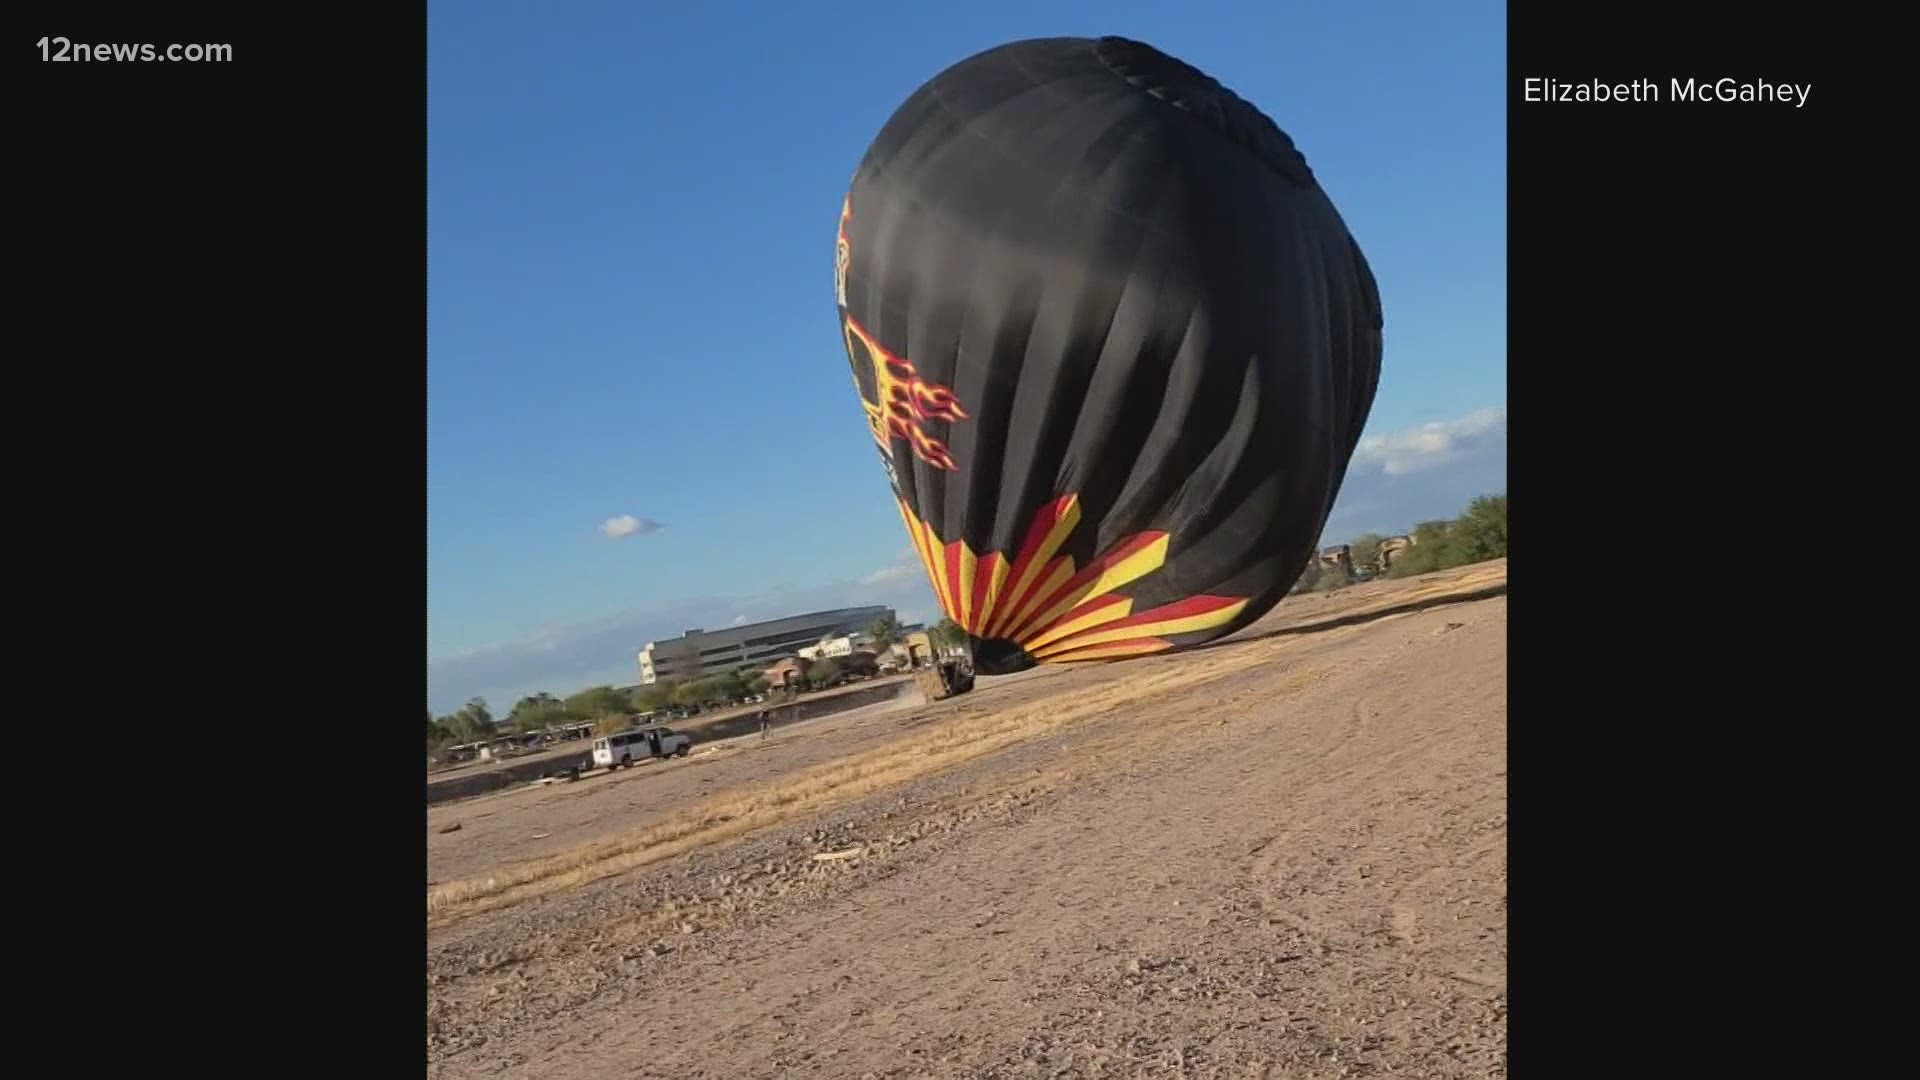 beet Wrak Persona Video shows hot air balloon crash, 9-year-old girl describes scene |  12news.com